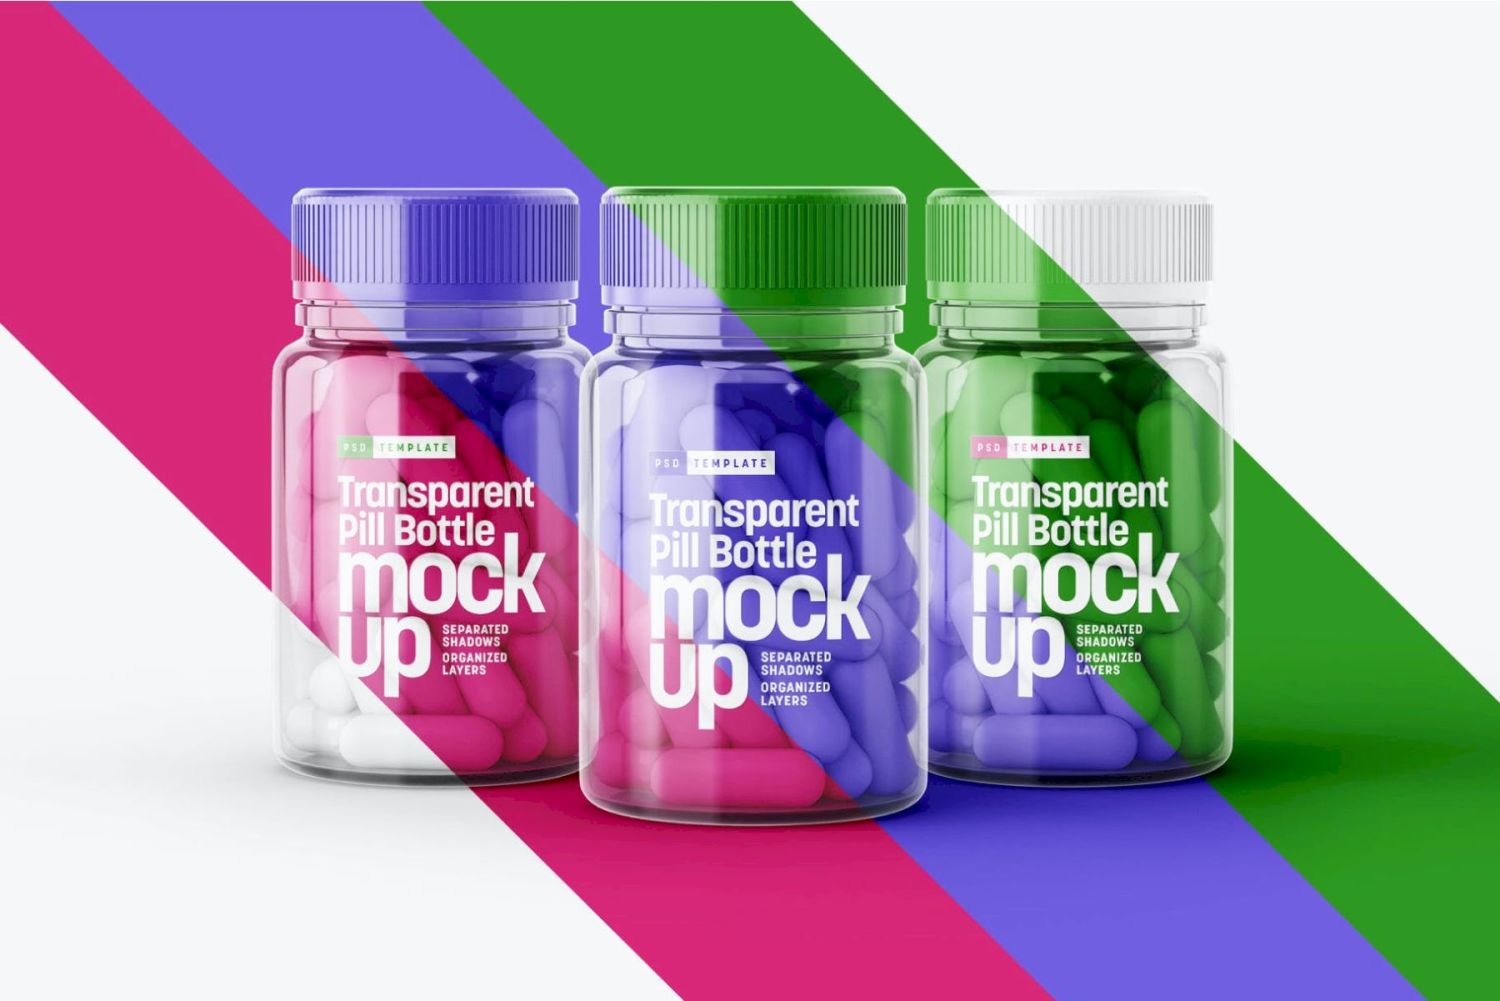 透明药瓶样机套装 Transparent Pill Bottle Mockup Set插图1